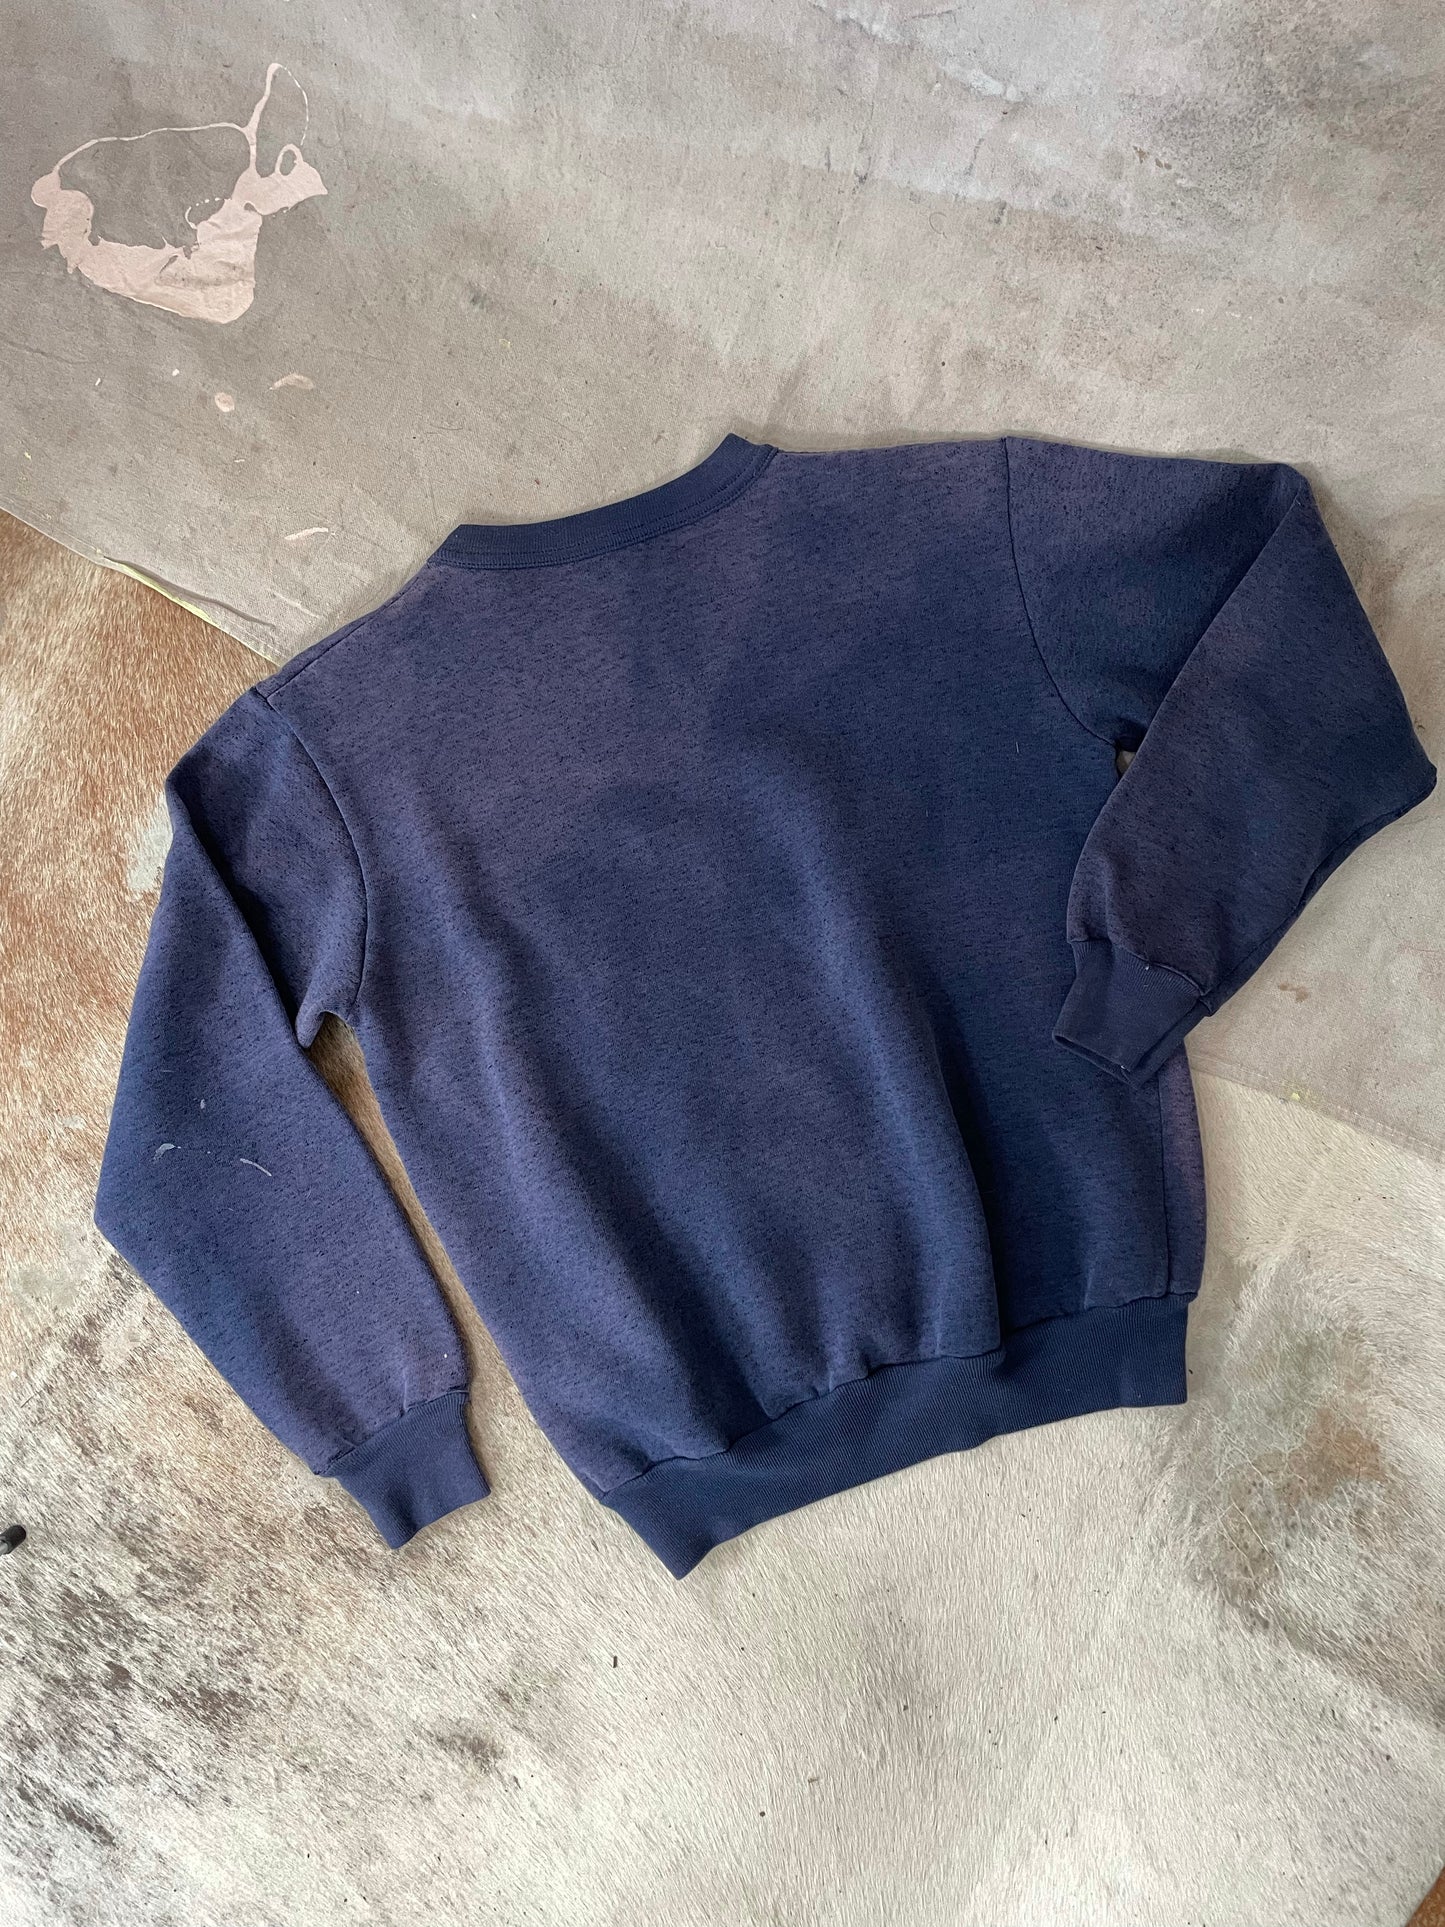 80s/90s Faded Navy Blue Sweatshirt